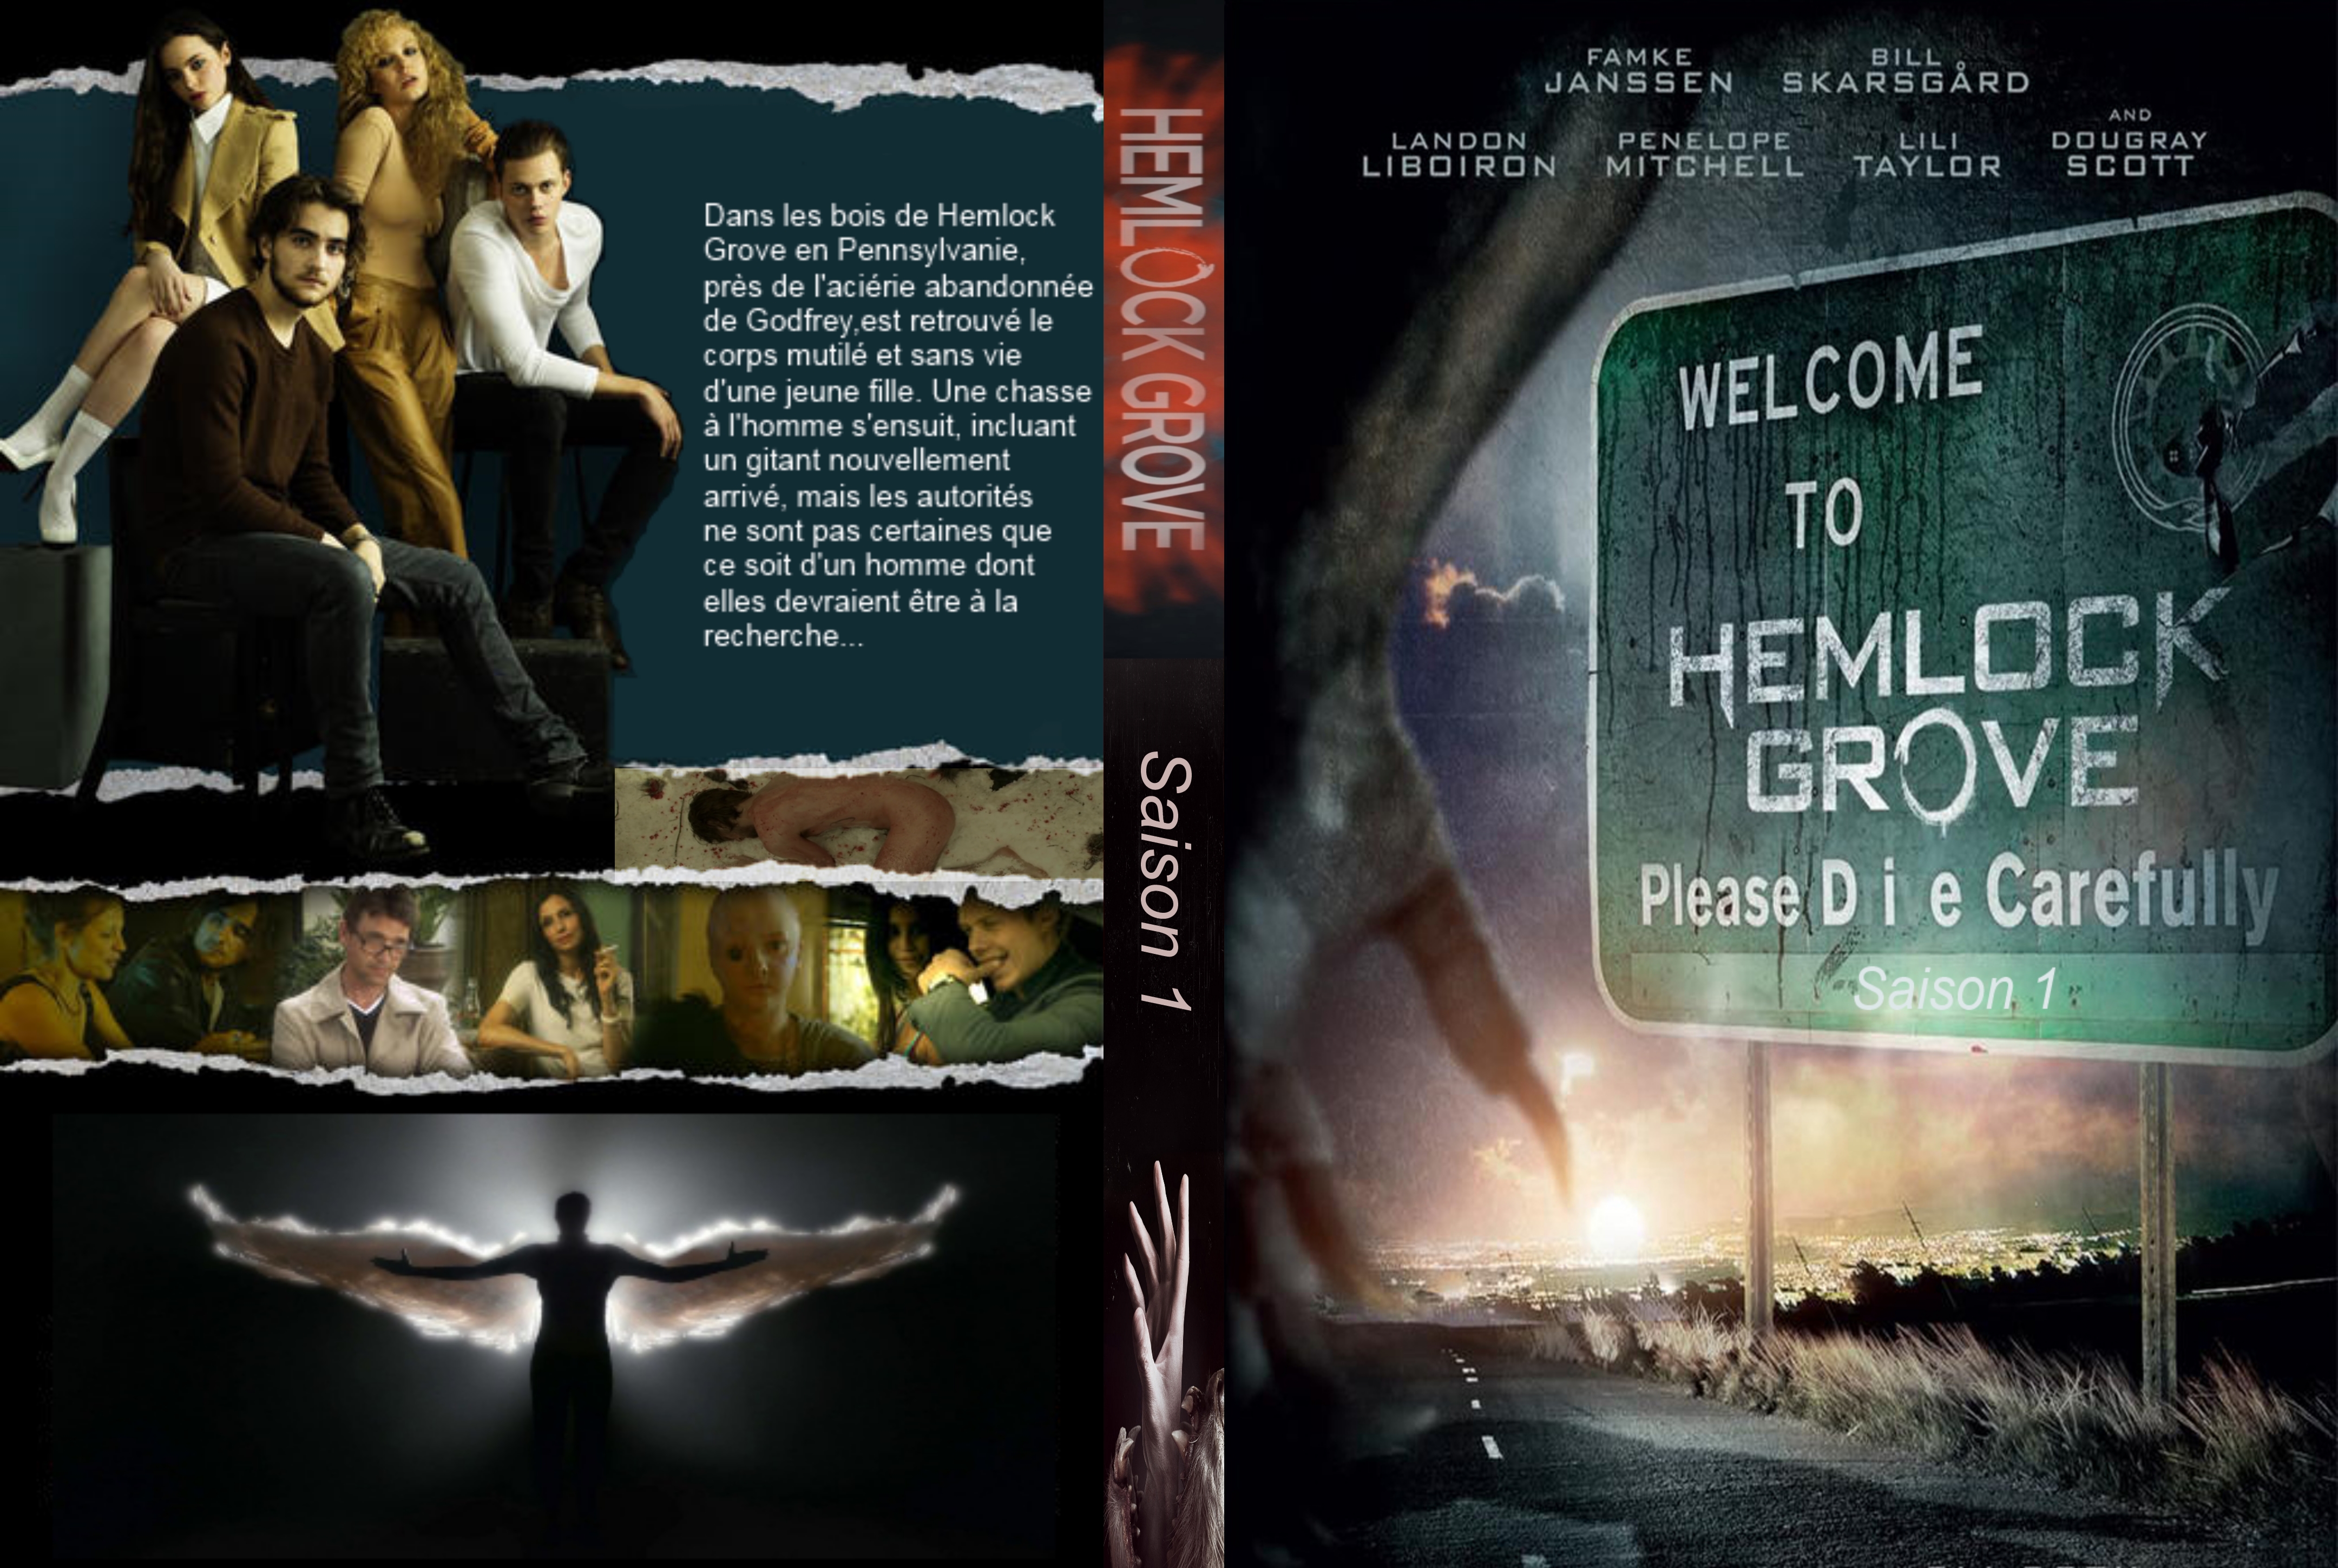 Jaquette DVD Hemlock Grove Saison 1 custom